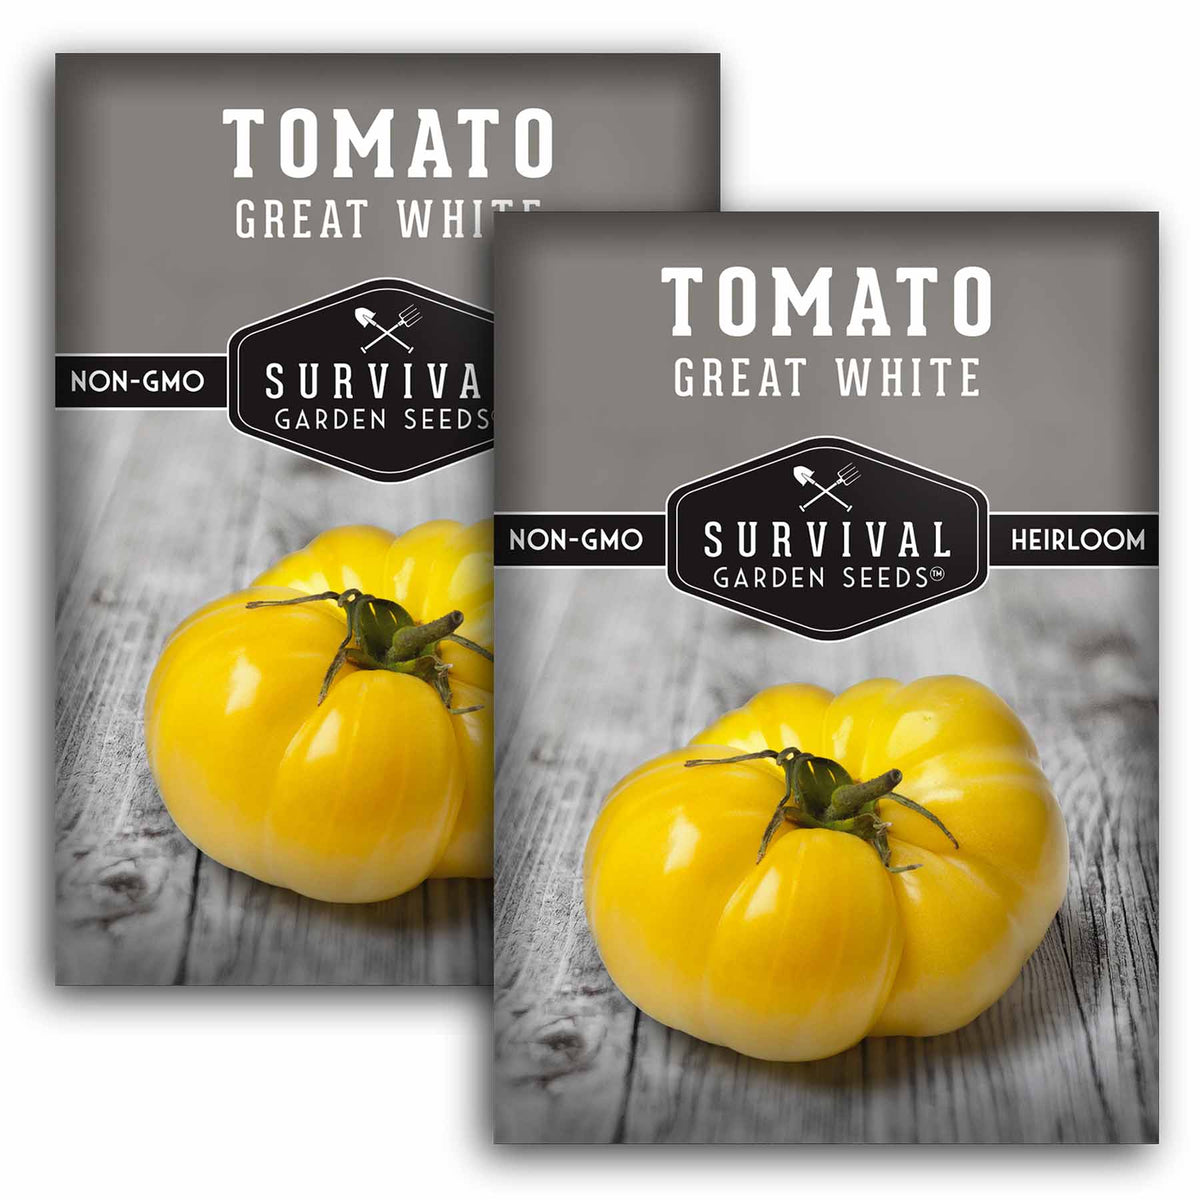 Great White Tomato Seeds